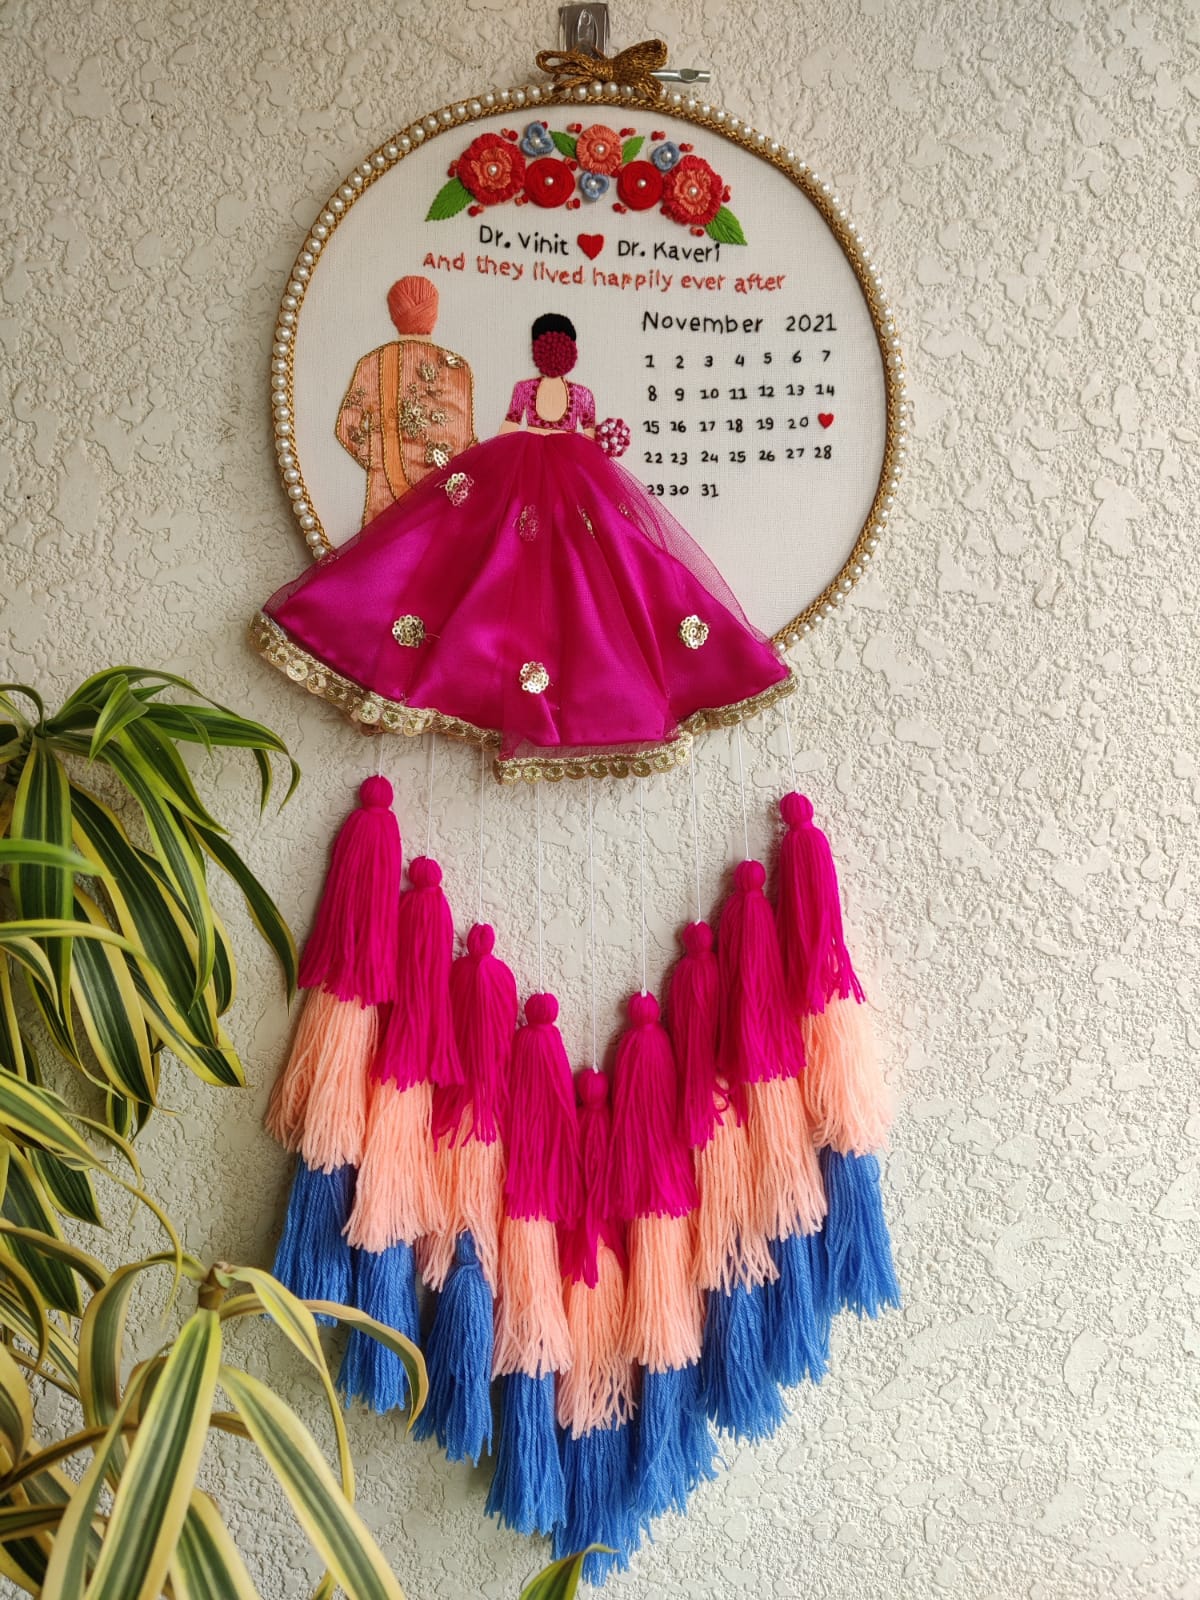 Customizable Bride & Groom Calendar Embroidered Hoop with Tassels